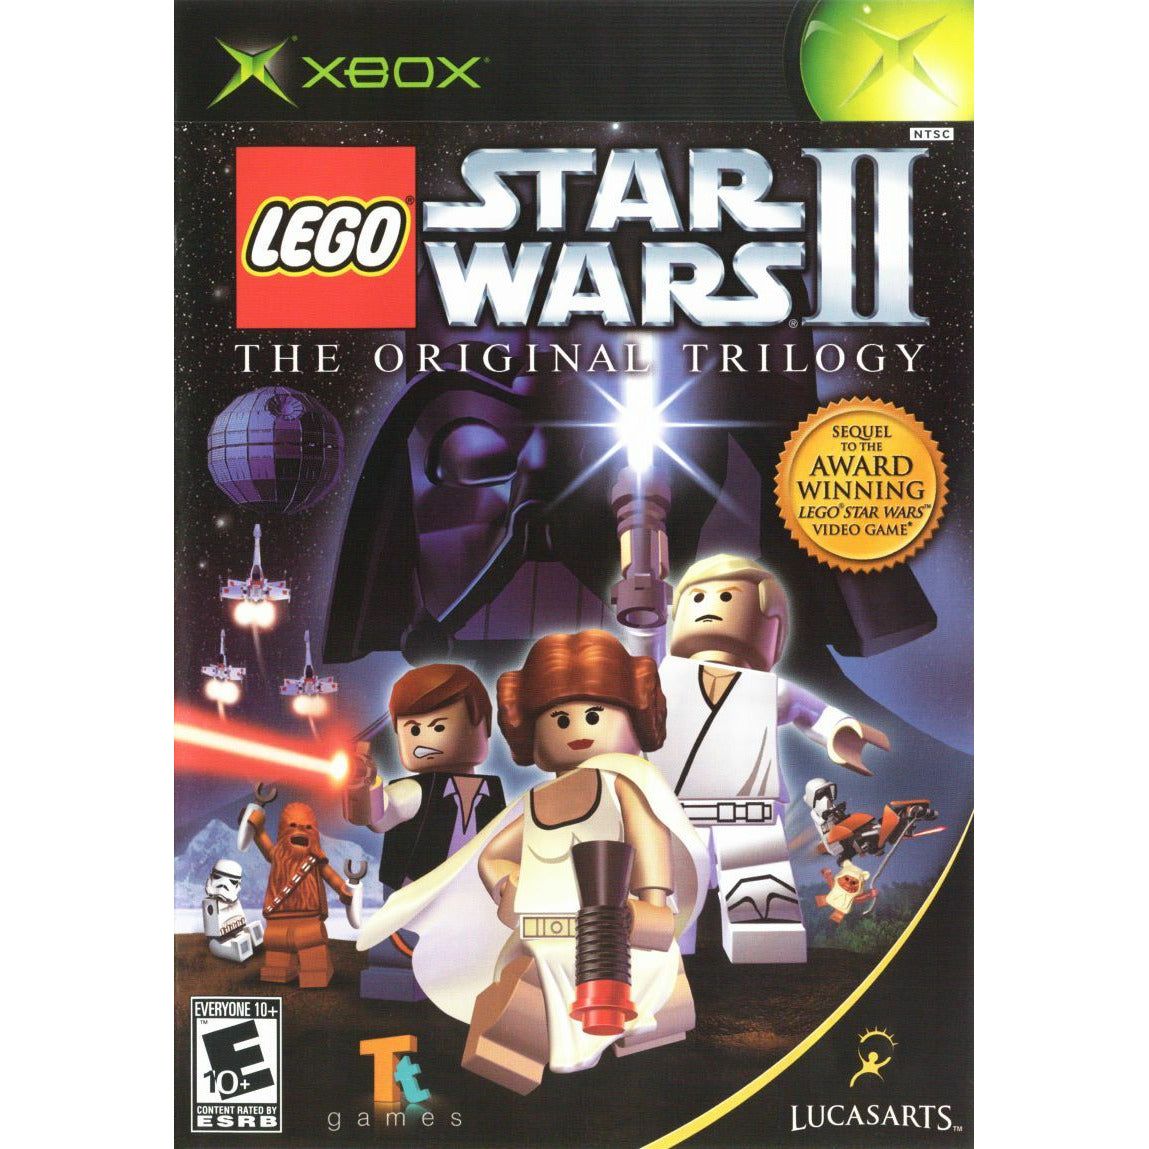 XBOX - Lego Star Wars II The Original Trilogy (Platinum Hits) (Sealed)